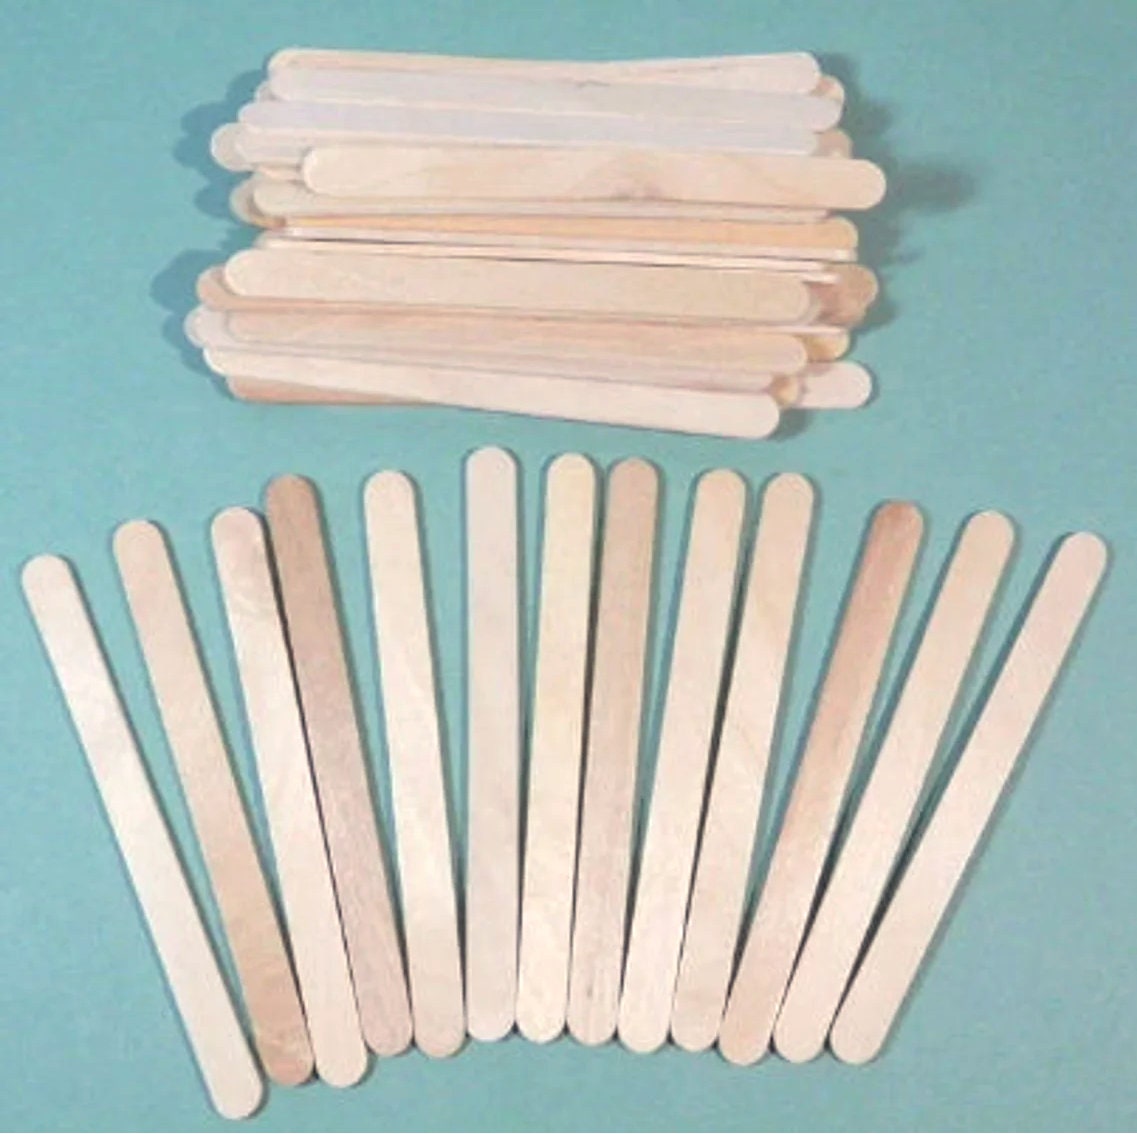 1000 Sticks 6 Inch Jumbo Wood Craft Popsicle Sticks CHOOSE YOUR COLOR 